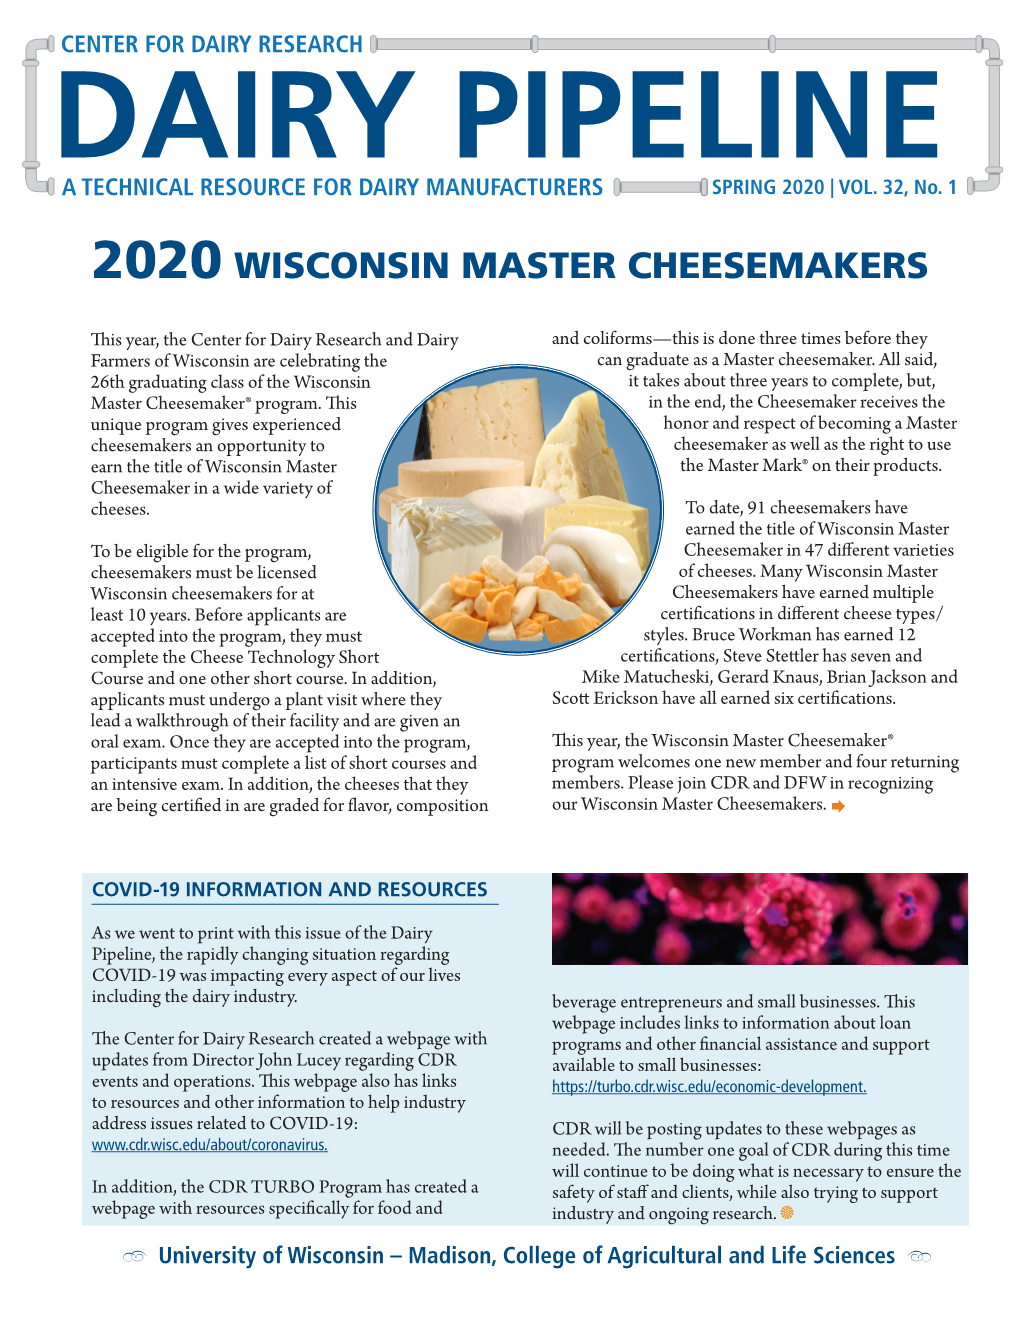 2020 Wisconsin Master Cheesemakers